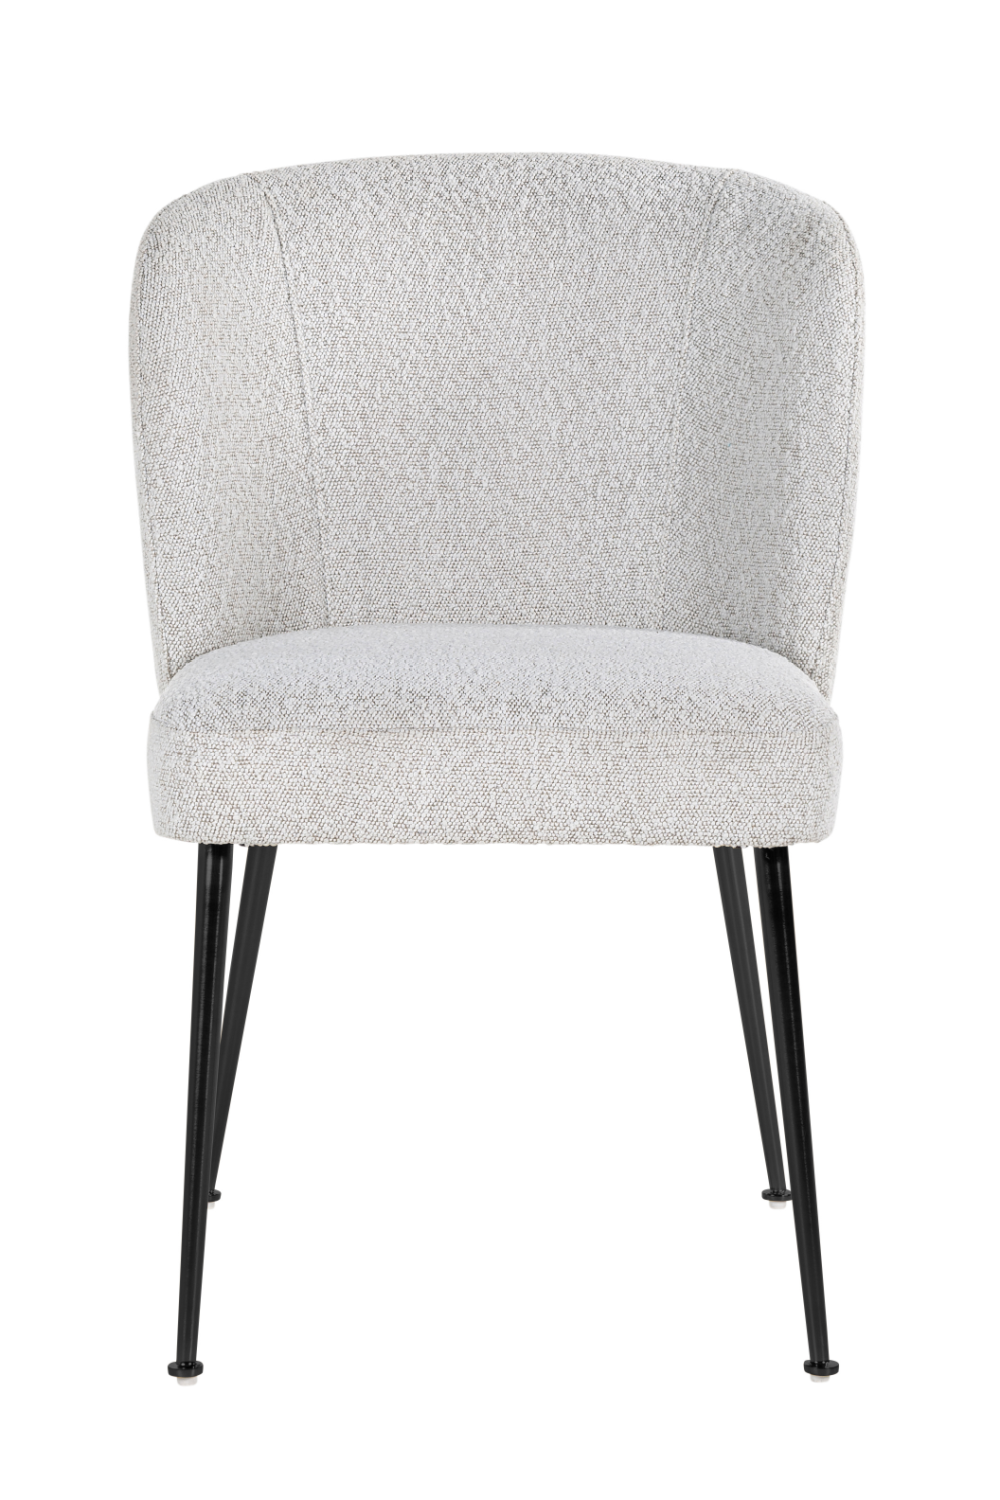 Black Leg White Bouclé Chair | OROA Fallon | OROA.com